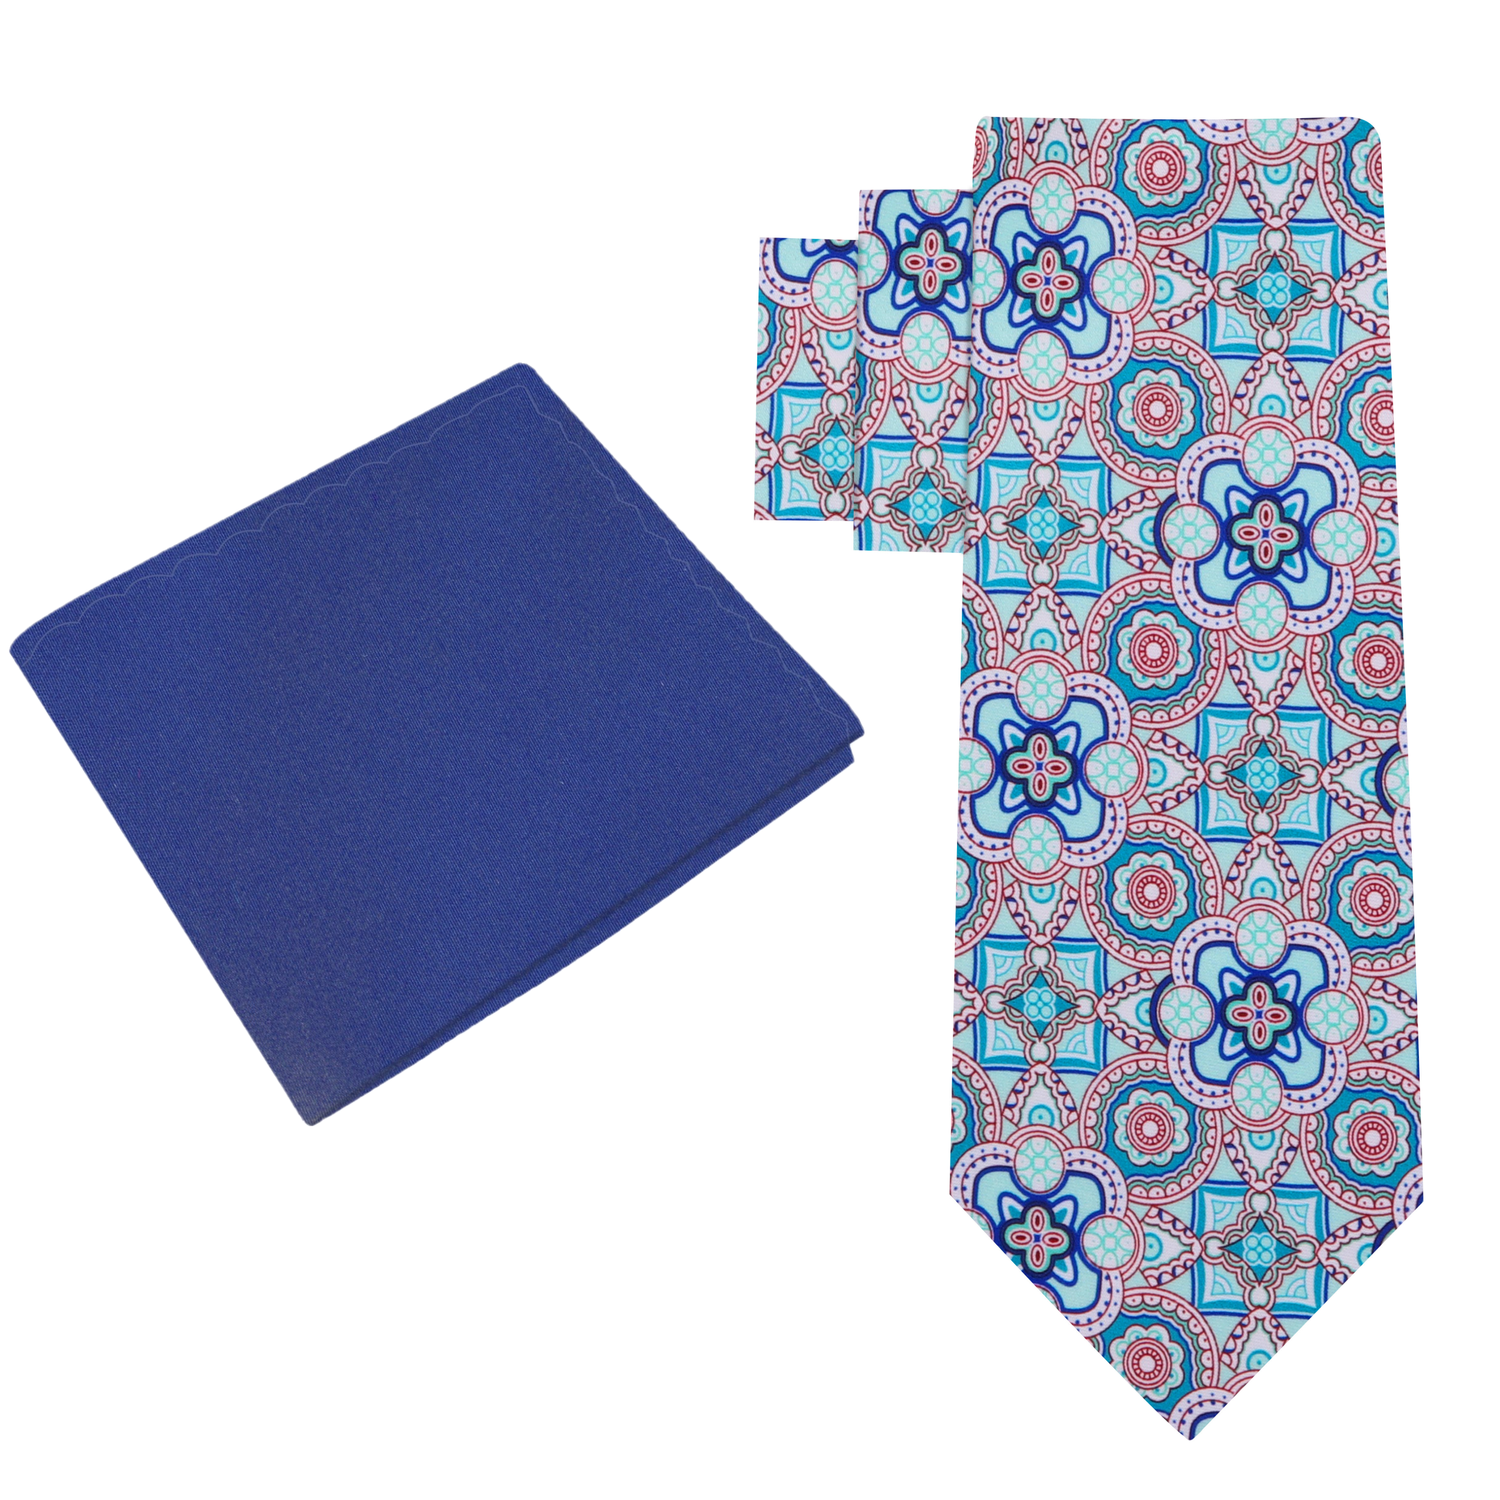 Alt View: White, Light Blue, Blue Mosaic Necktie and Blue Square